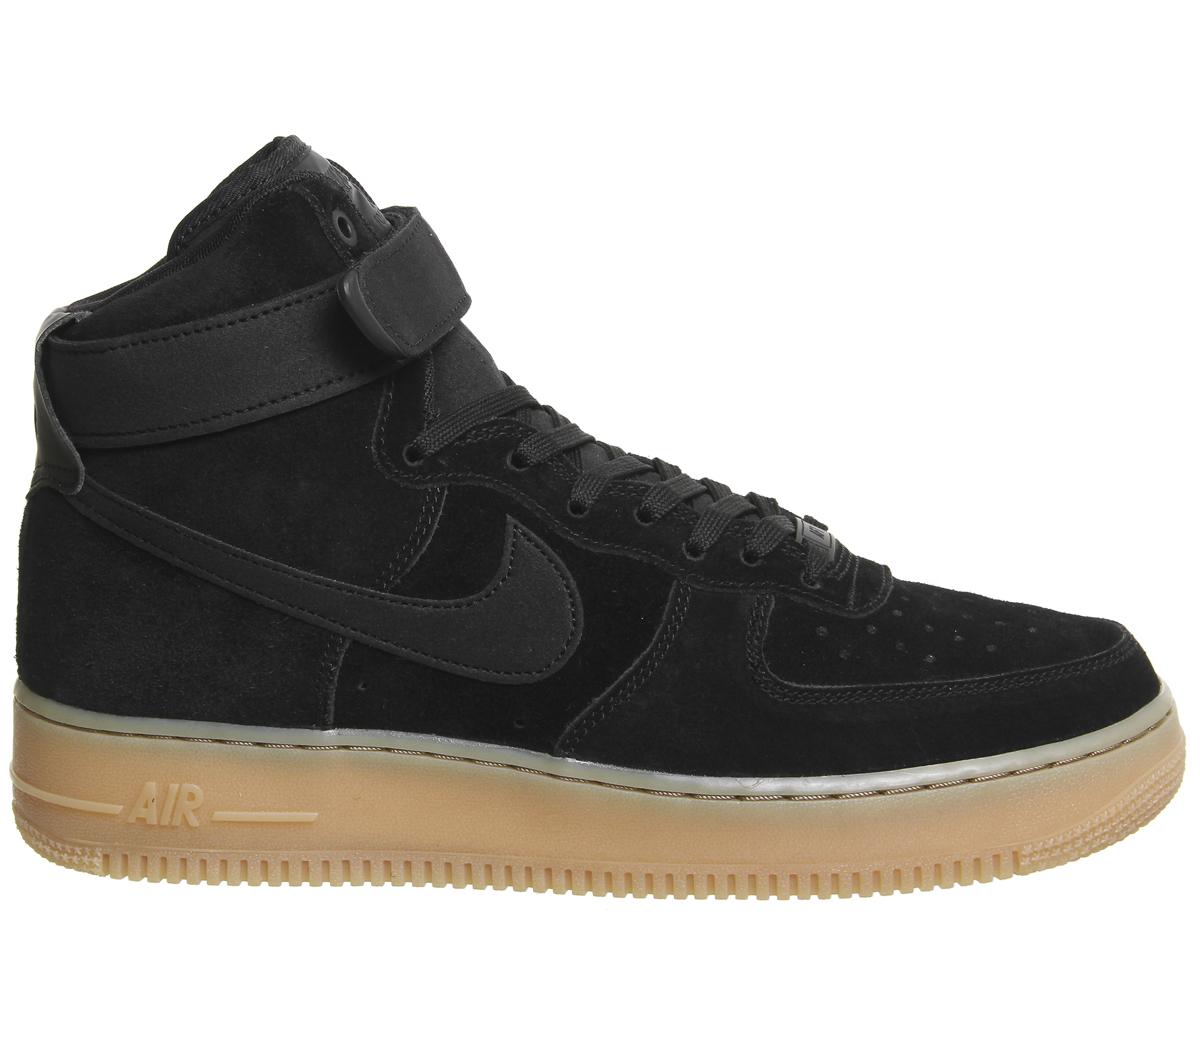 Nike Air Force 1 Hi Trainers Black Gum M - Basketball Shoes